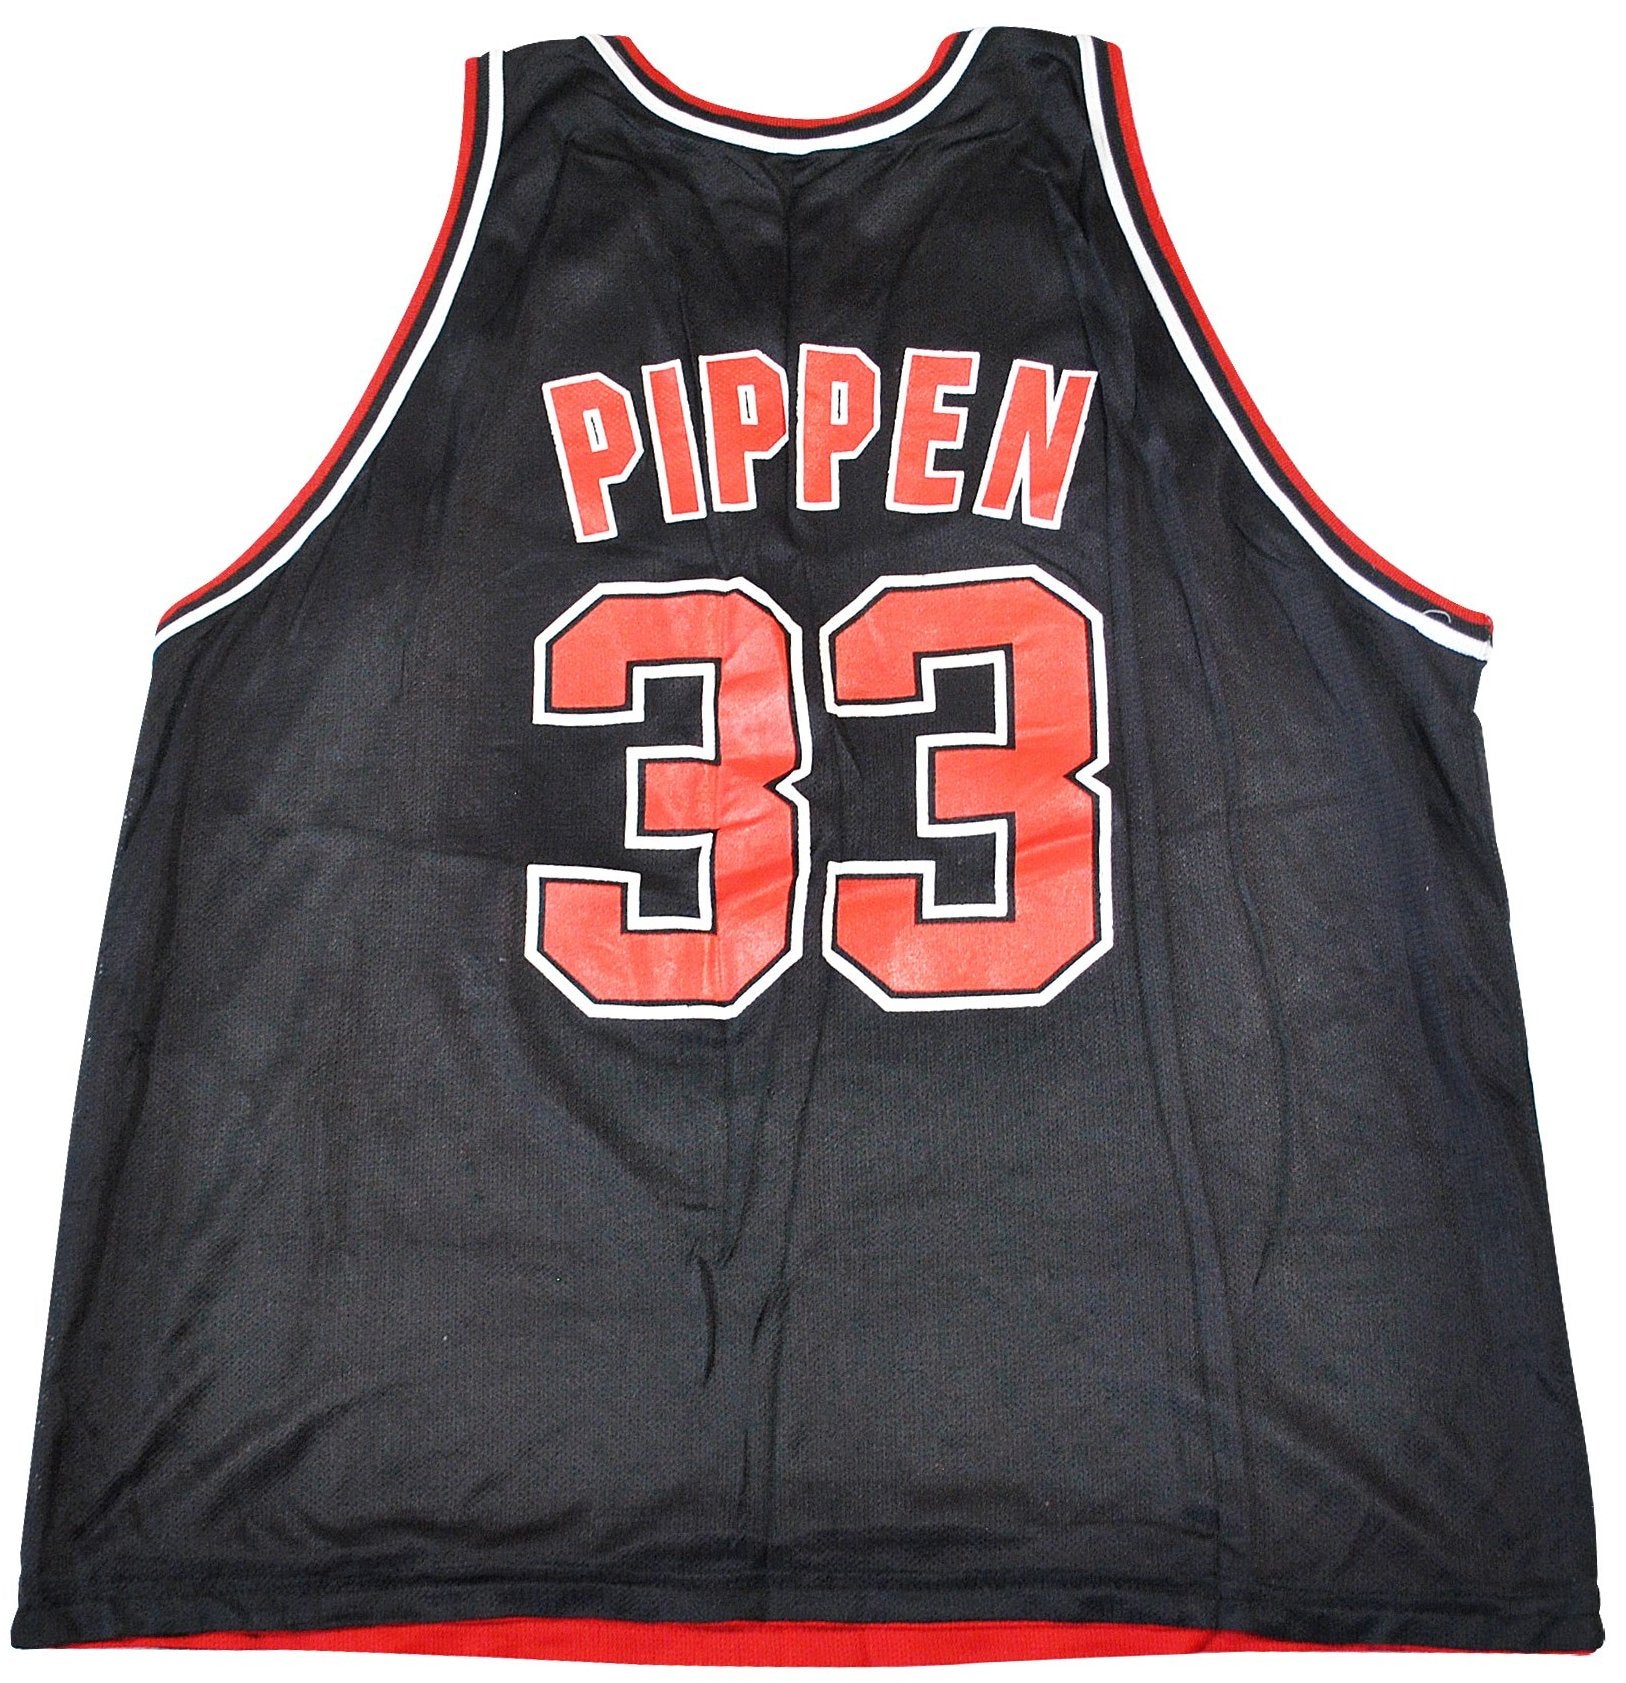 Vintage Champion NBA Chicago Bulls Scottie Pippen #33 Jersey - Men's S